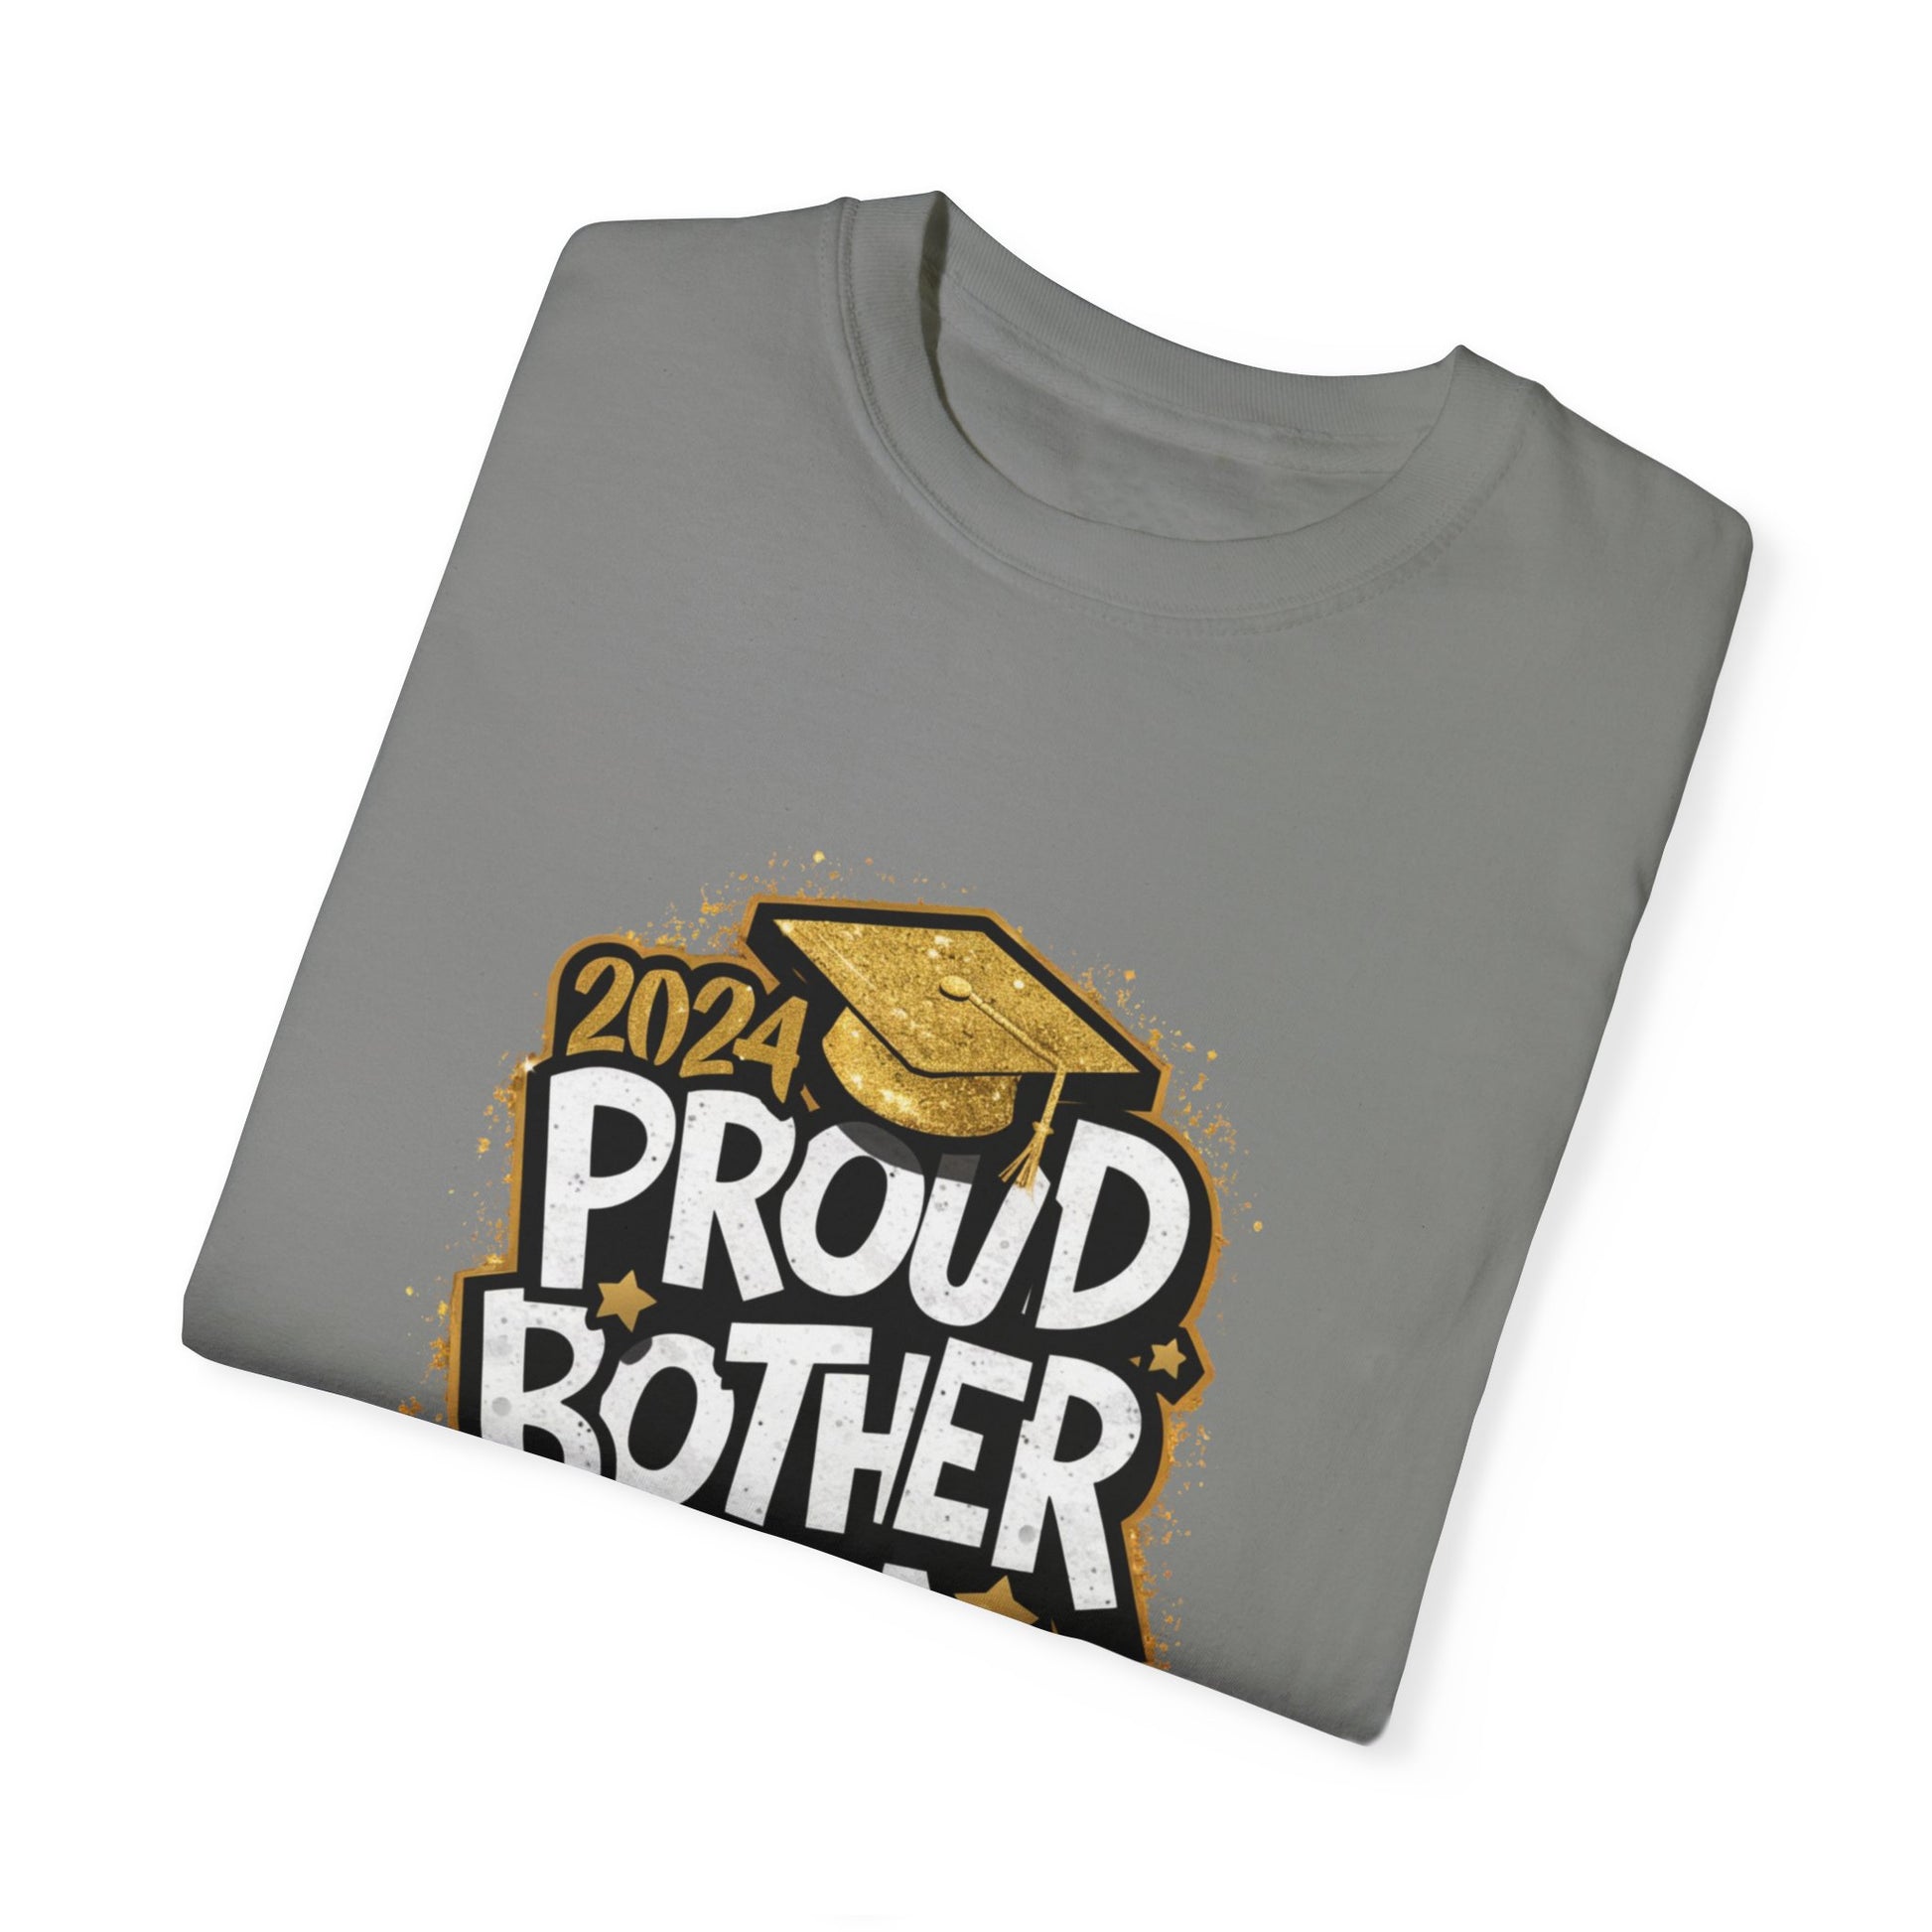 Proud Brother of a 2024 Graduate Unisex Garment-dyed T-shirt Cotton Funny Humorous Graphic Soft Premium Unisex Men Women Granite T-shirt Birthday Gift-26